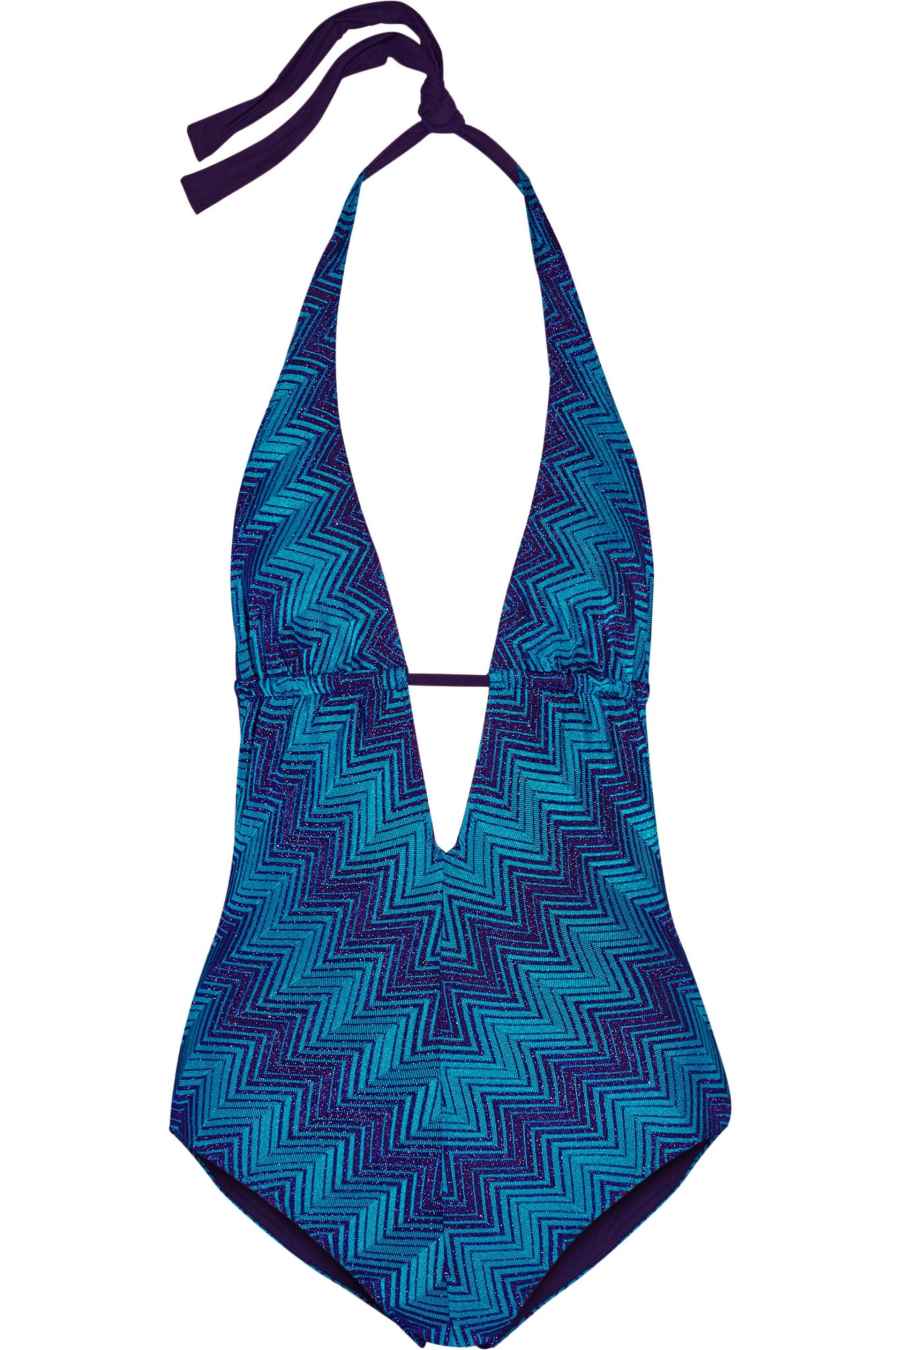 MISSONI Mare metallic crochet knit halterneck swimsuit